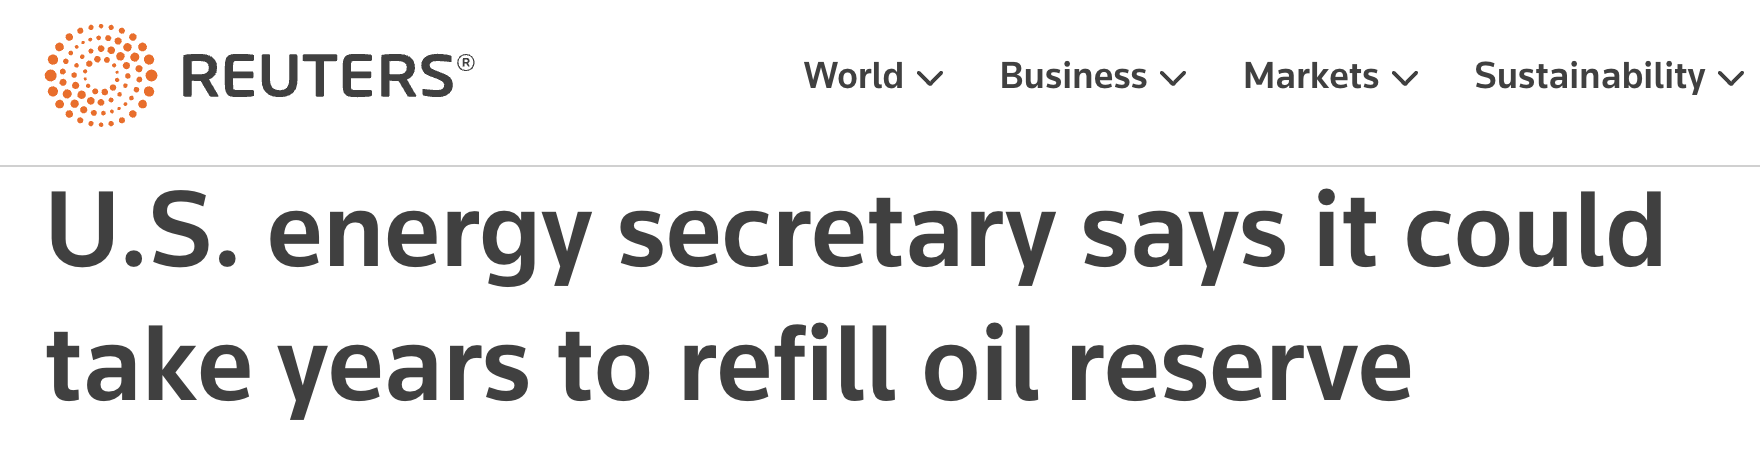 Reuters headline on US refilling oil reserves